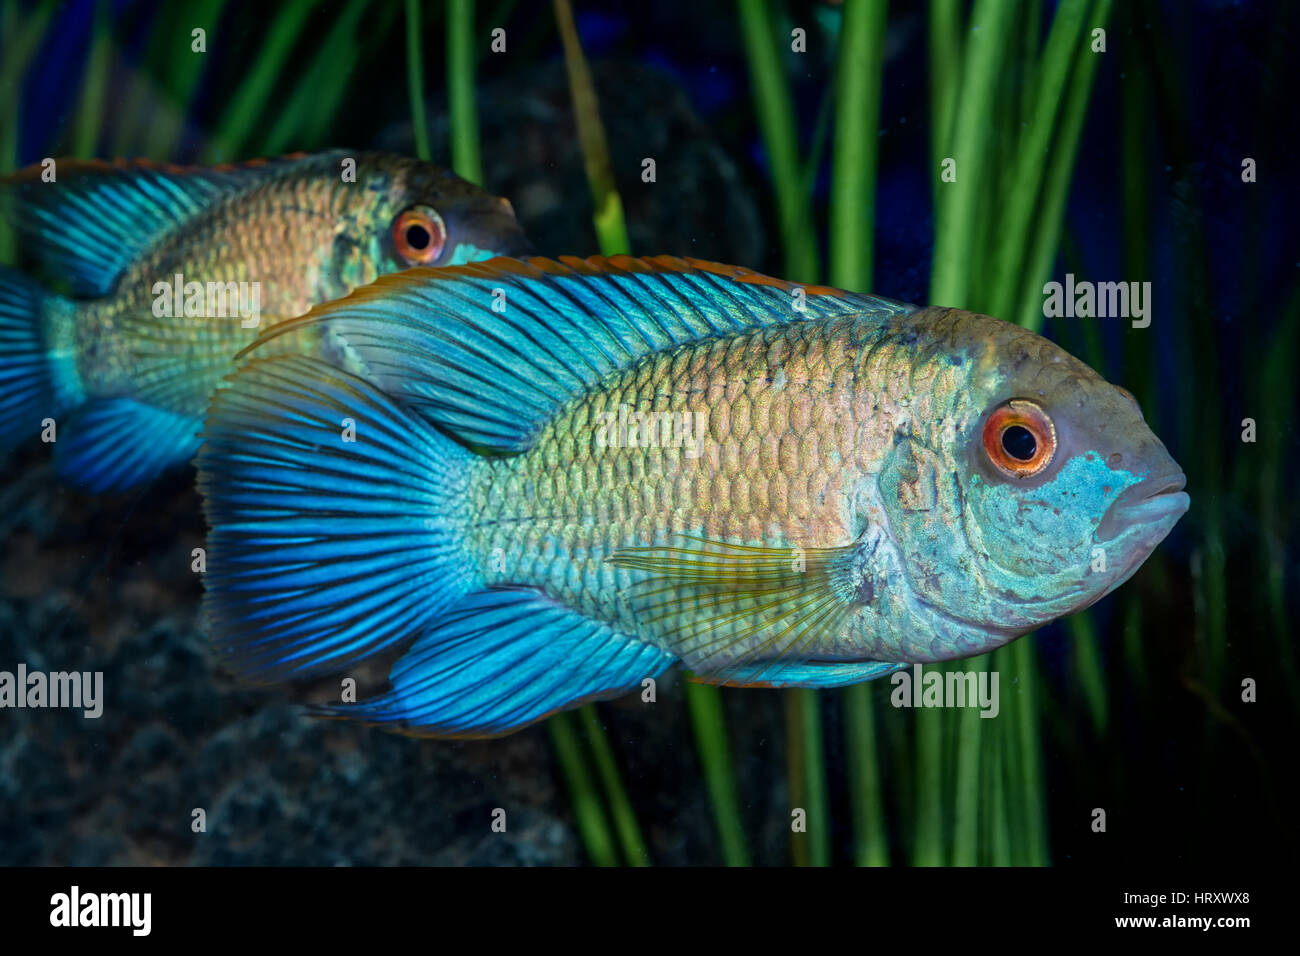 Portrait of freshwater cichlid fish (Andinoacara sp.) in aquarium Stock Photo